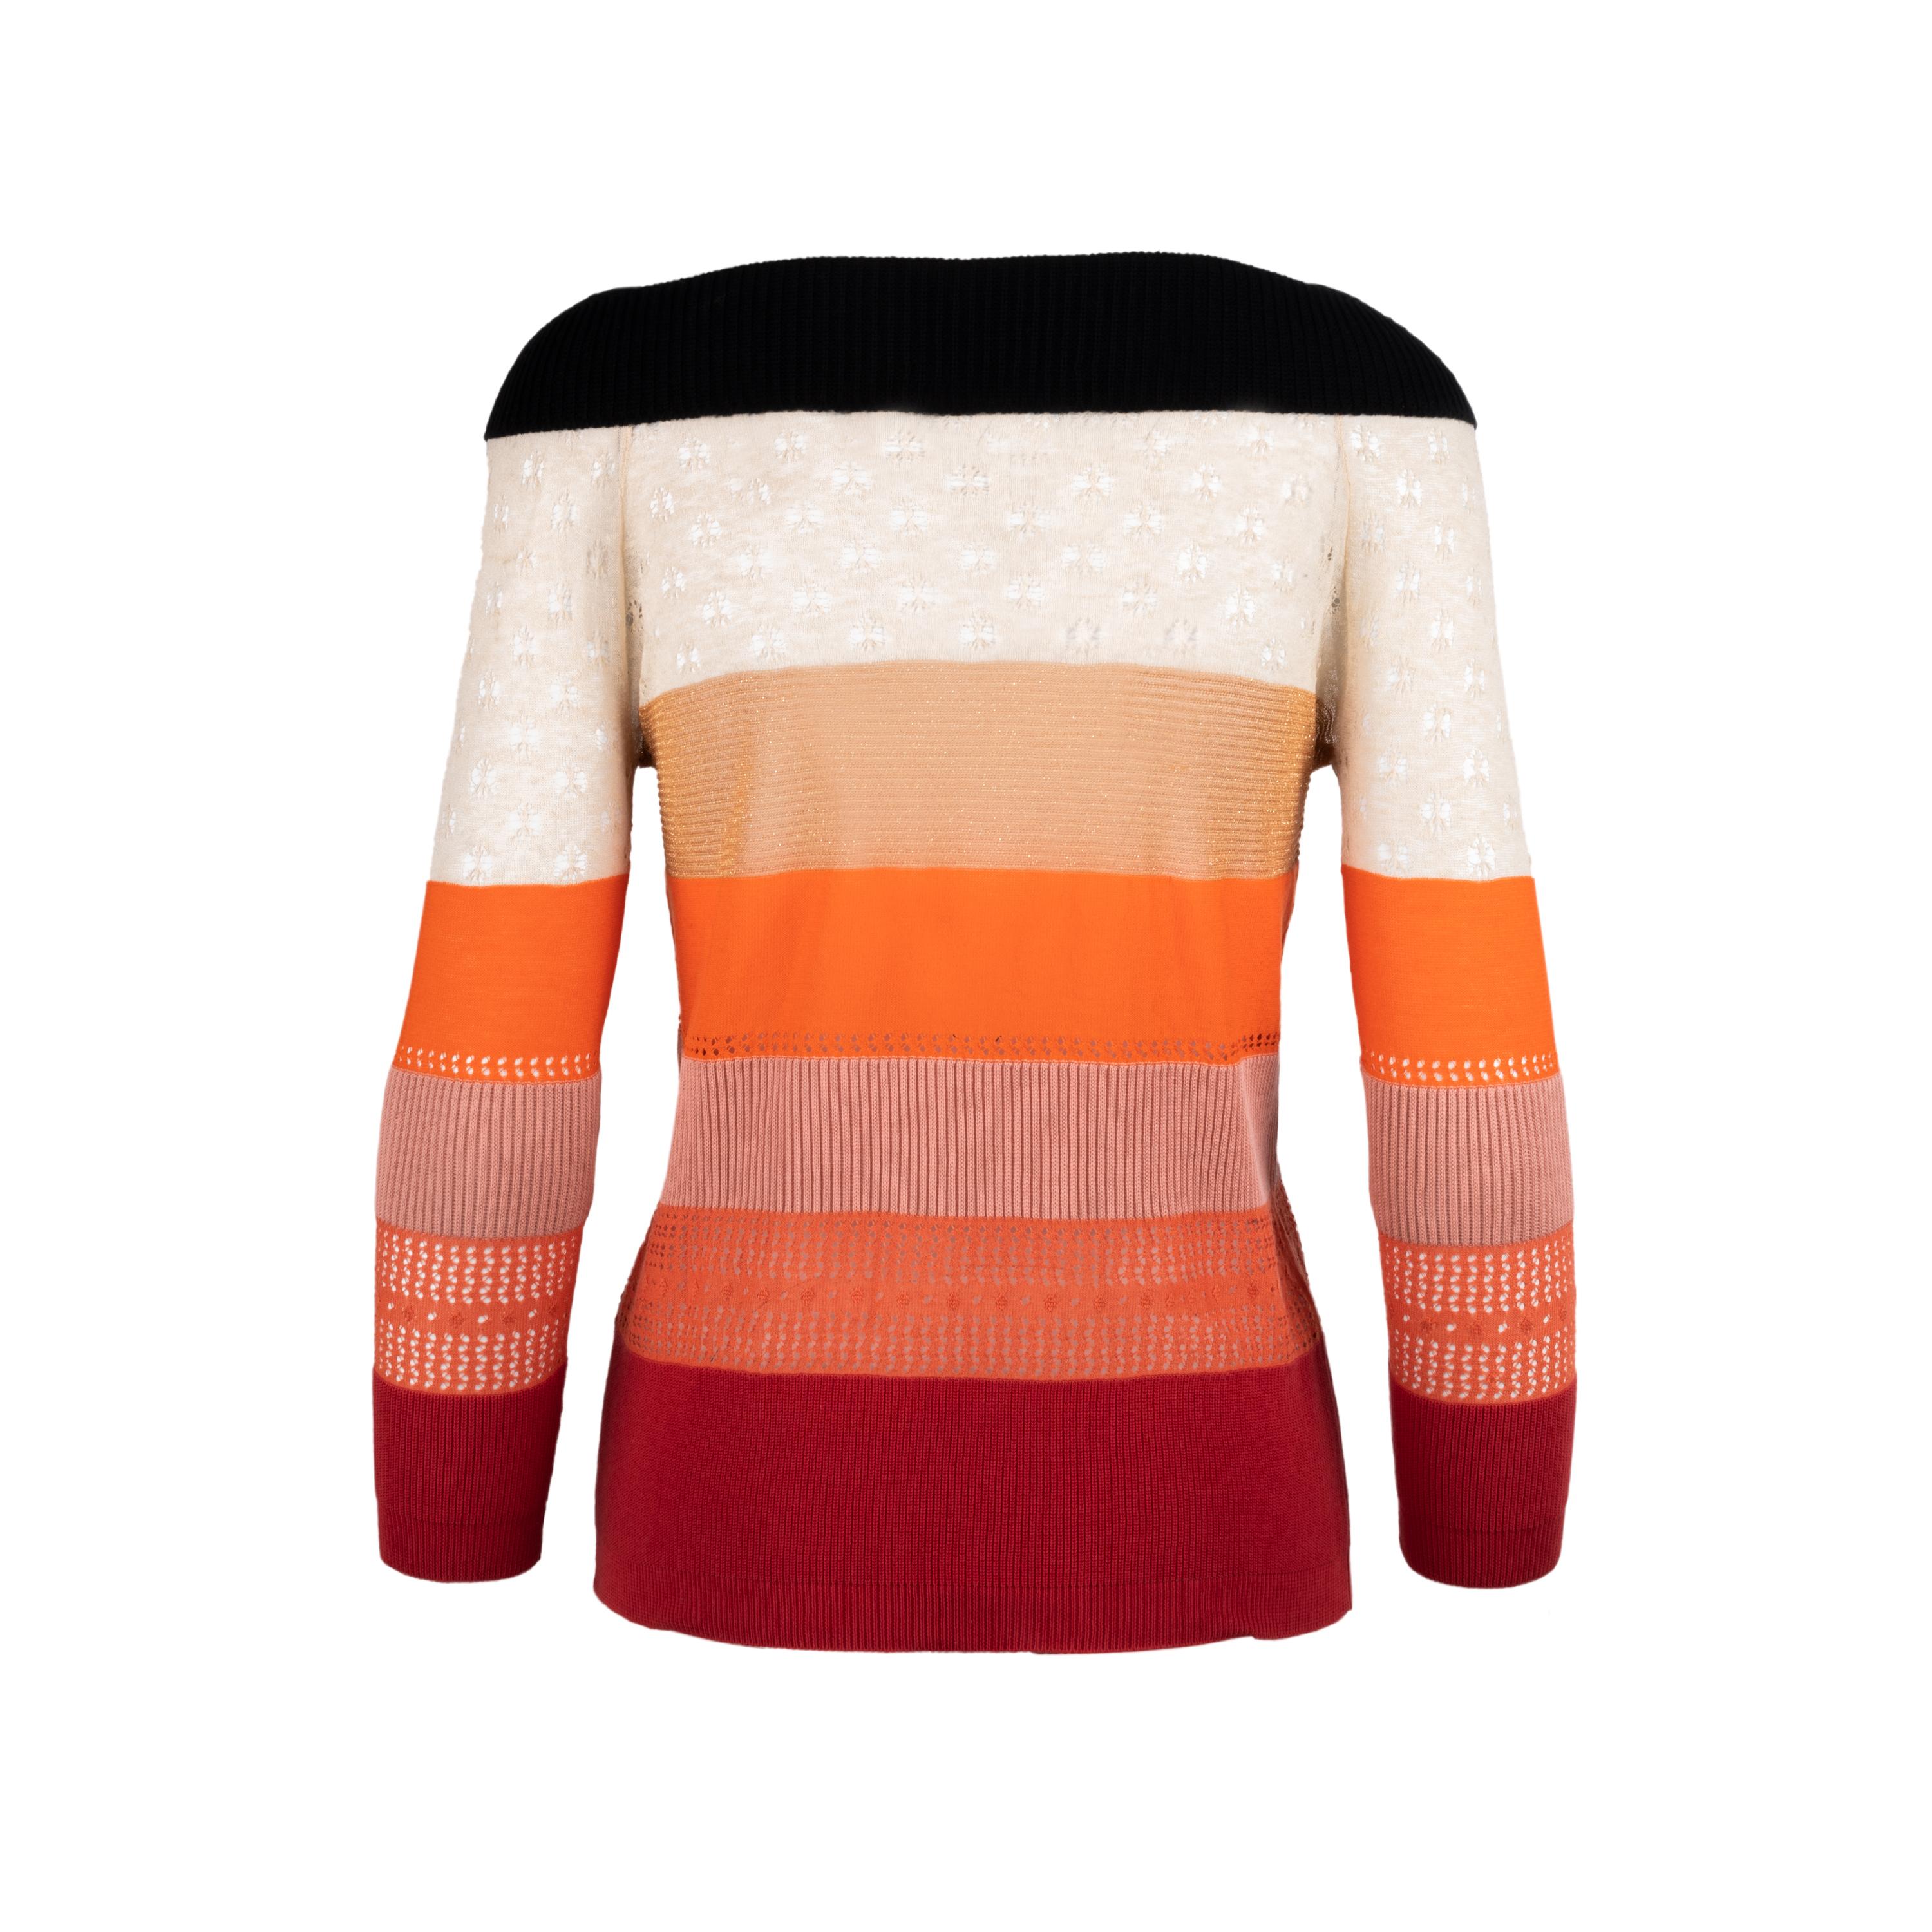 Sonia Rykiel multicolor semi-sheer cotton sweater. Boat neckline design.